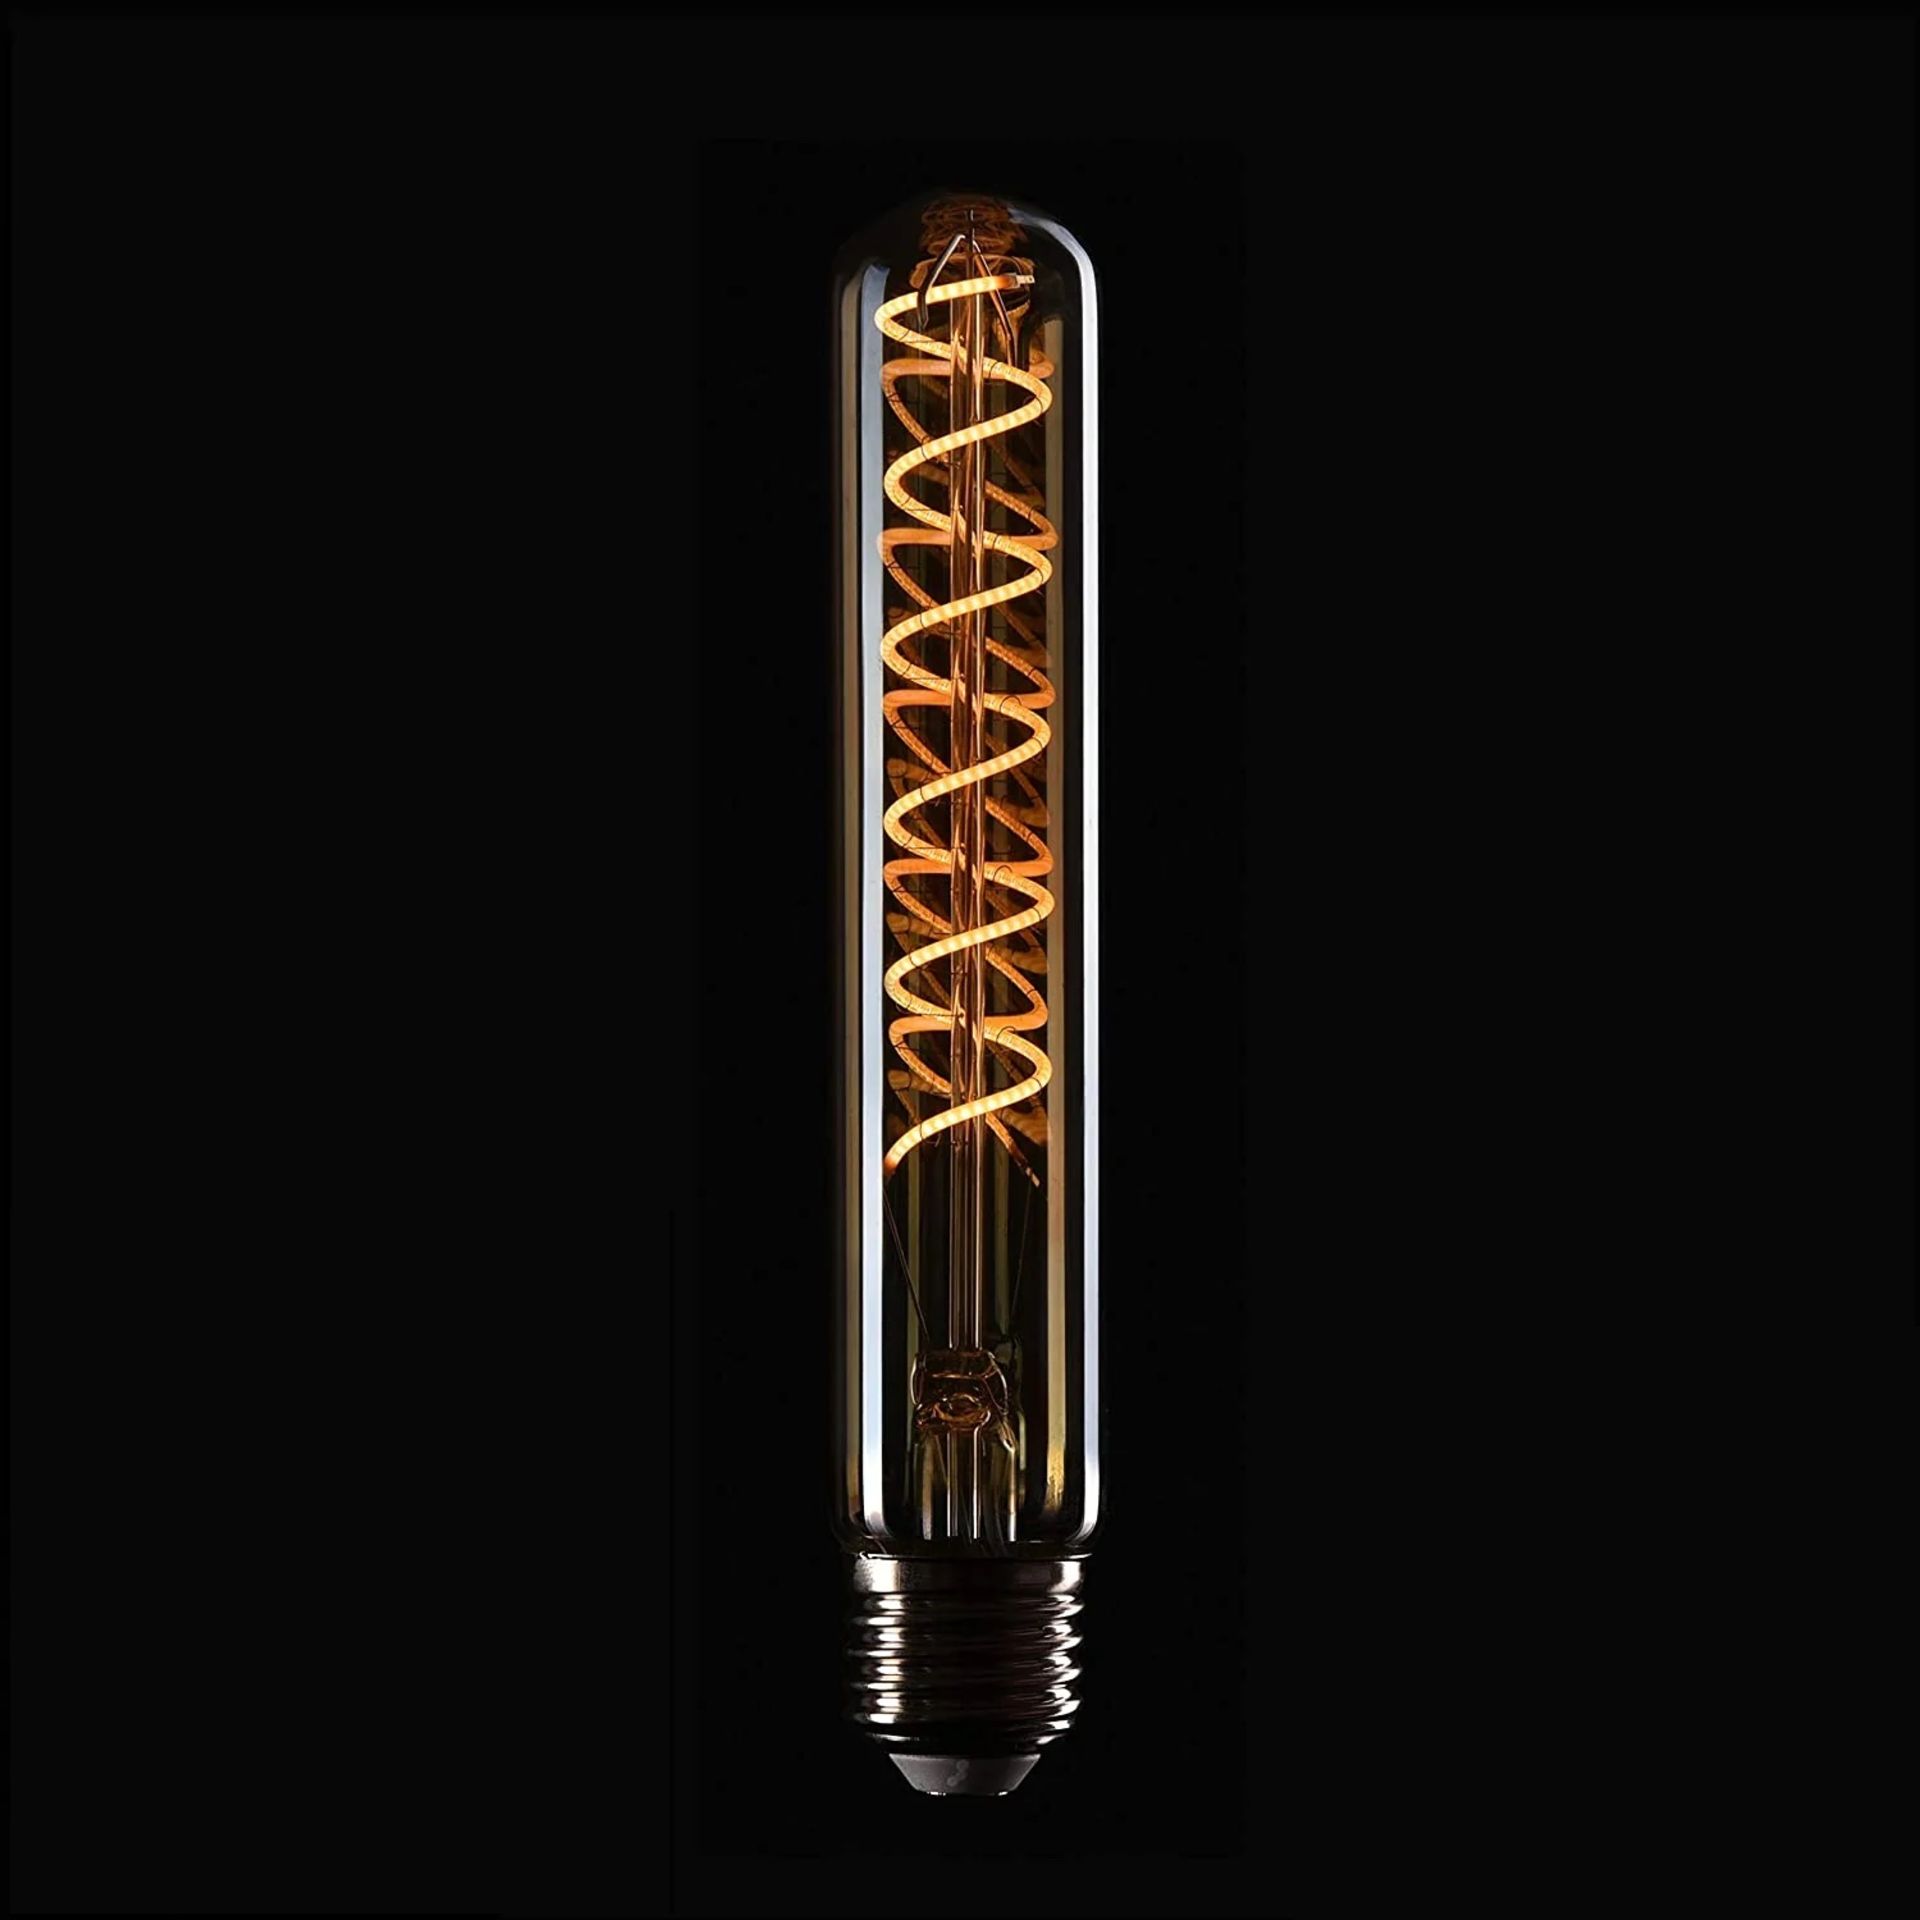 6 x CROWN LED Edison Flat Pipe Lightbulb 4W/40W Warm White - NEW & BOXED - BIG RRP! - Image 4 of 8